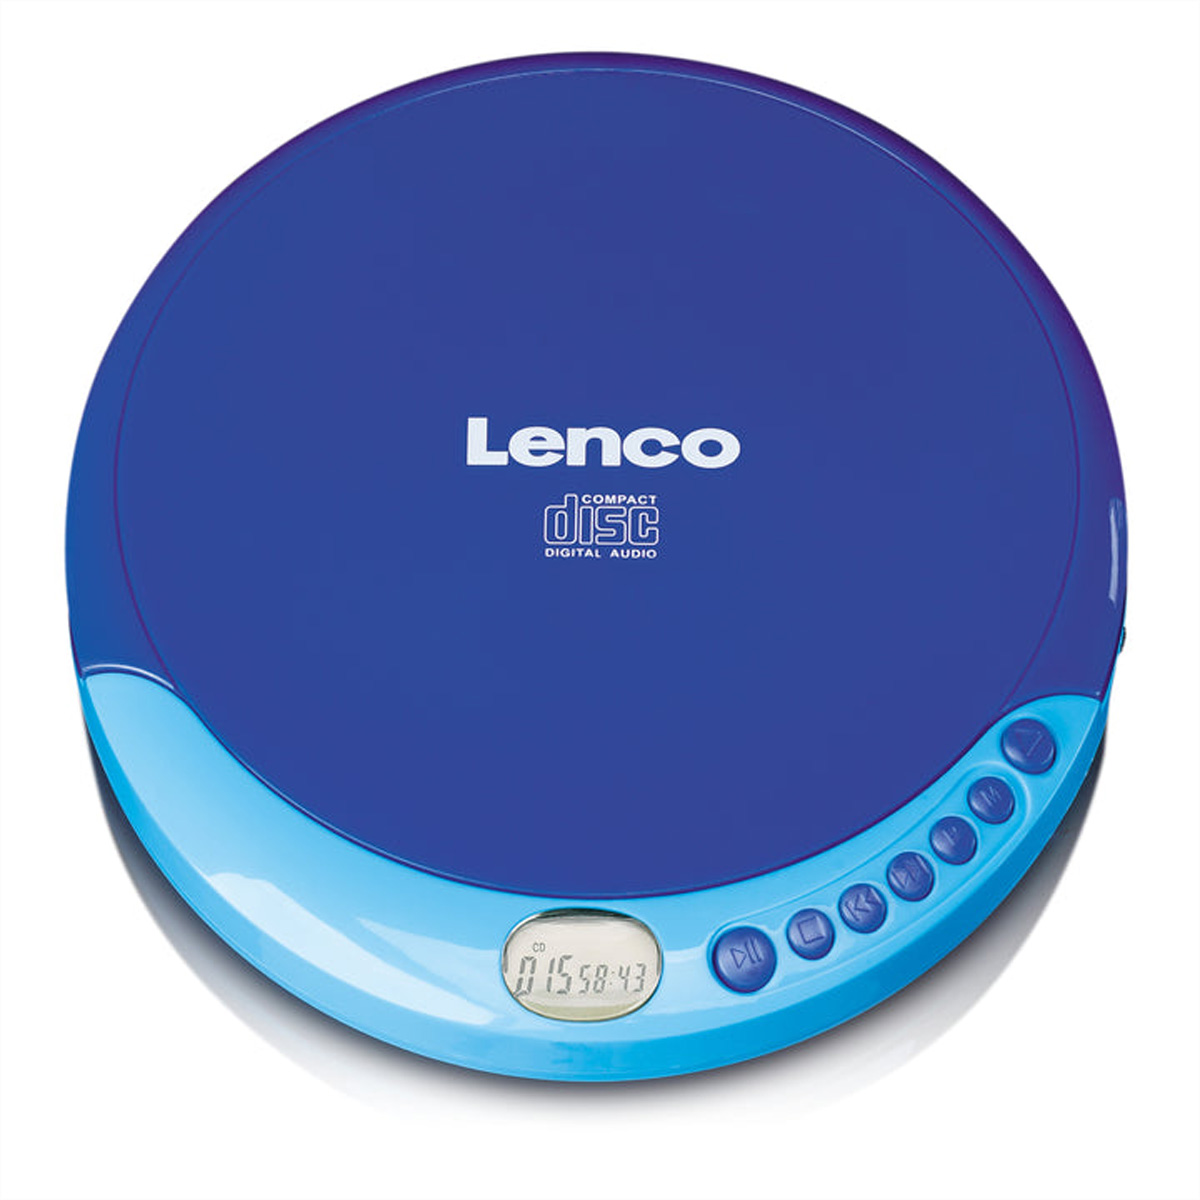 Lenco Portabler CD Player CD-011BU blau